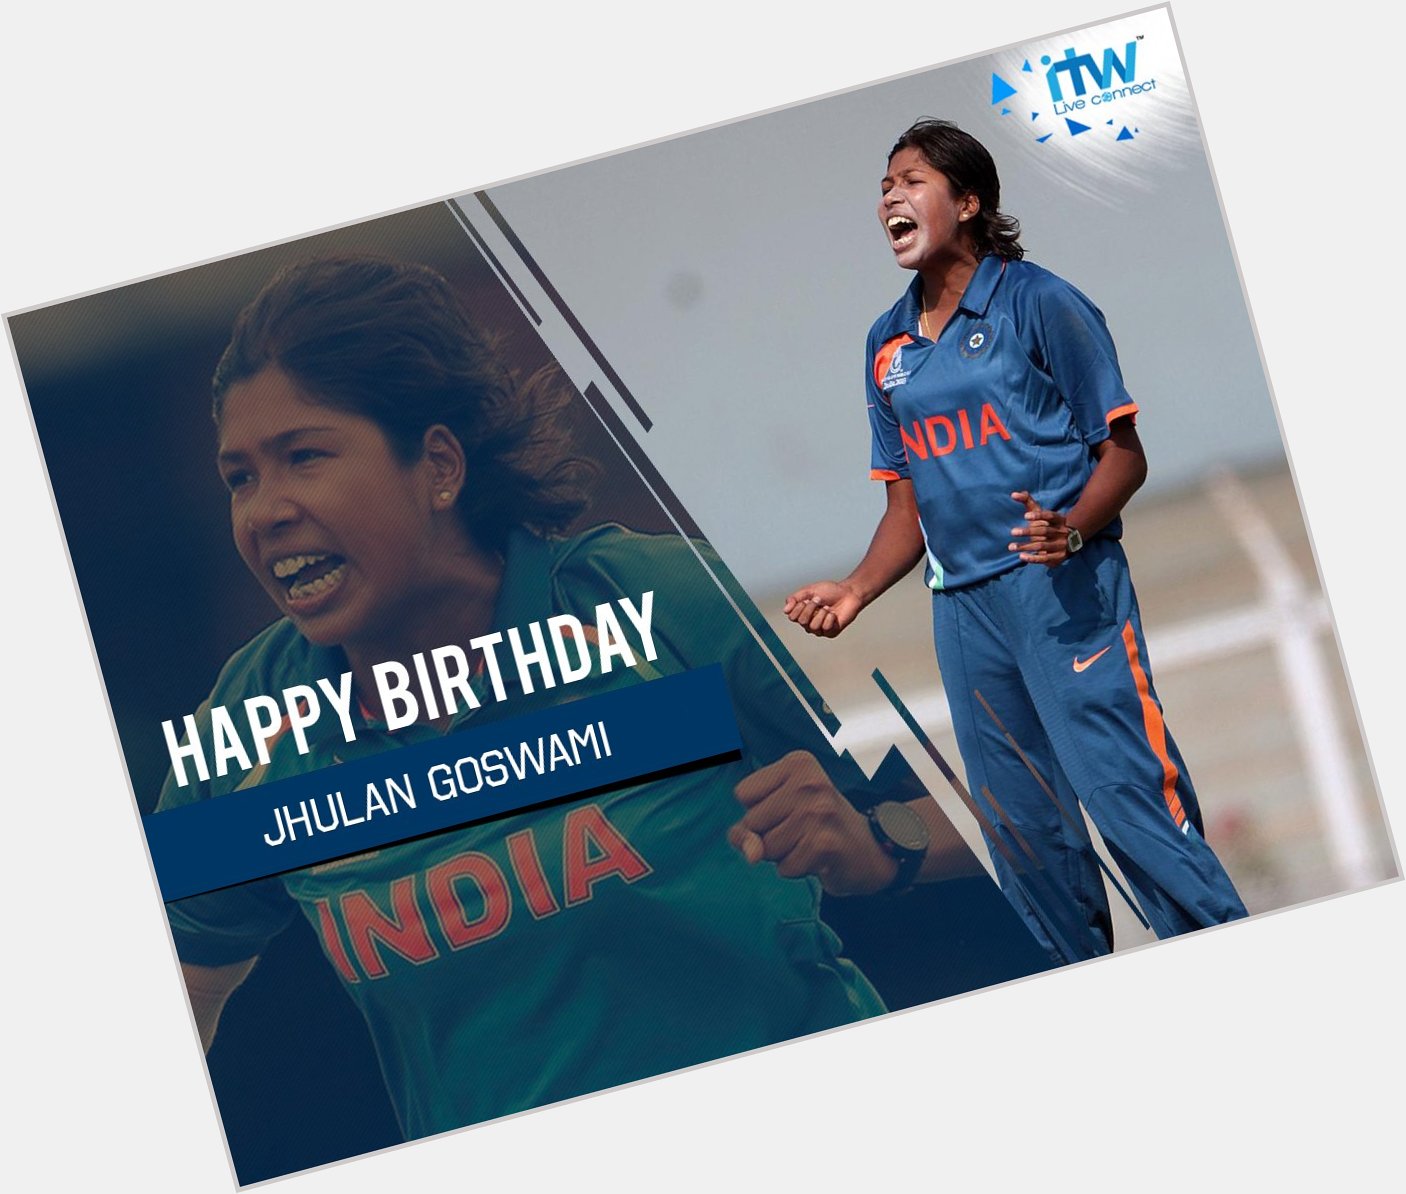 She is the leading wicket-taker in ODI\s (195 Wickets). Happy Birthday 